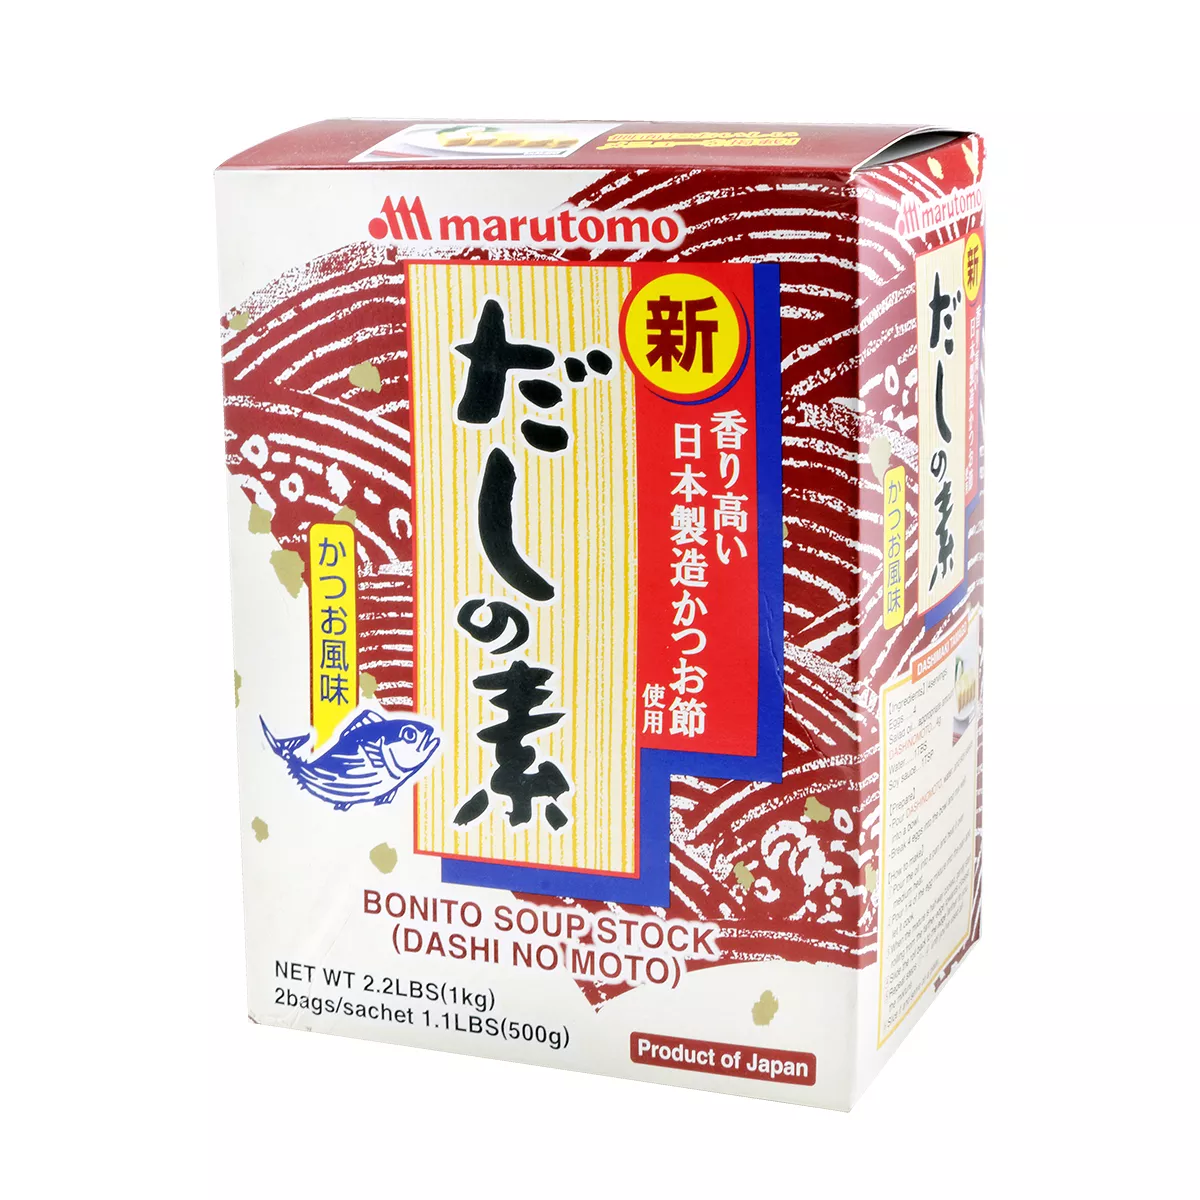 Bonito soup stock (Dashinomoto) MARUTOMO 1kg, [],asianfood.ro